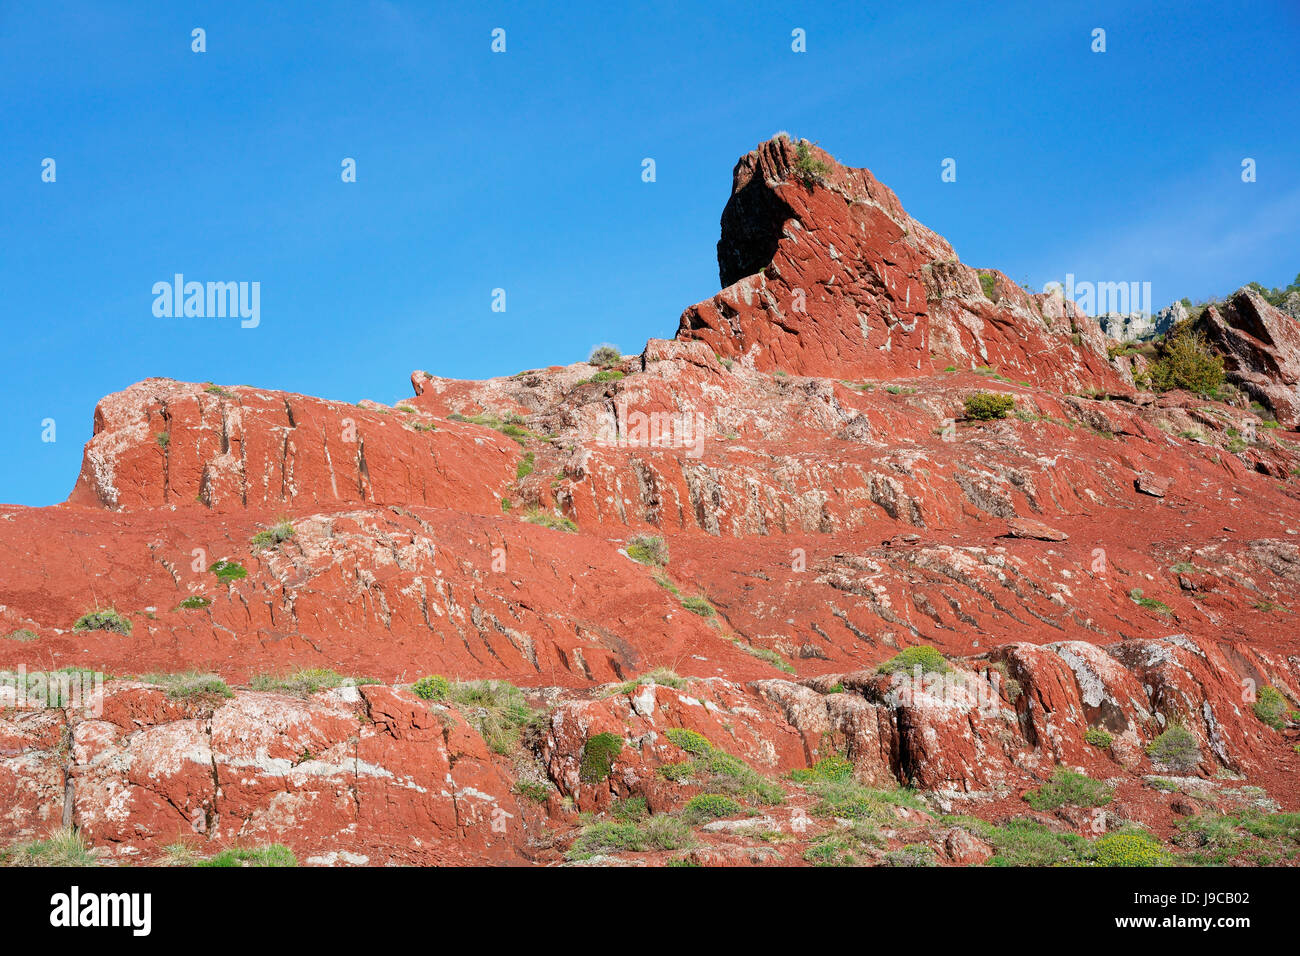 Roter Felsvorsprung auf der oberen Erhebung der Cians Gorge. L'Illion, Beuil, Alpes-Maritimes, Provence-Alpes-Côte d'Azur, Frankreich. Stockfoto